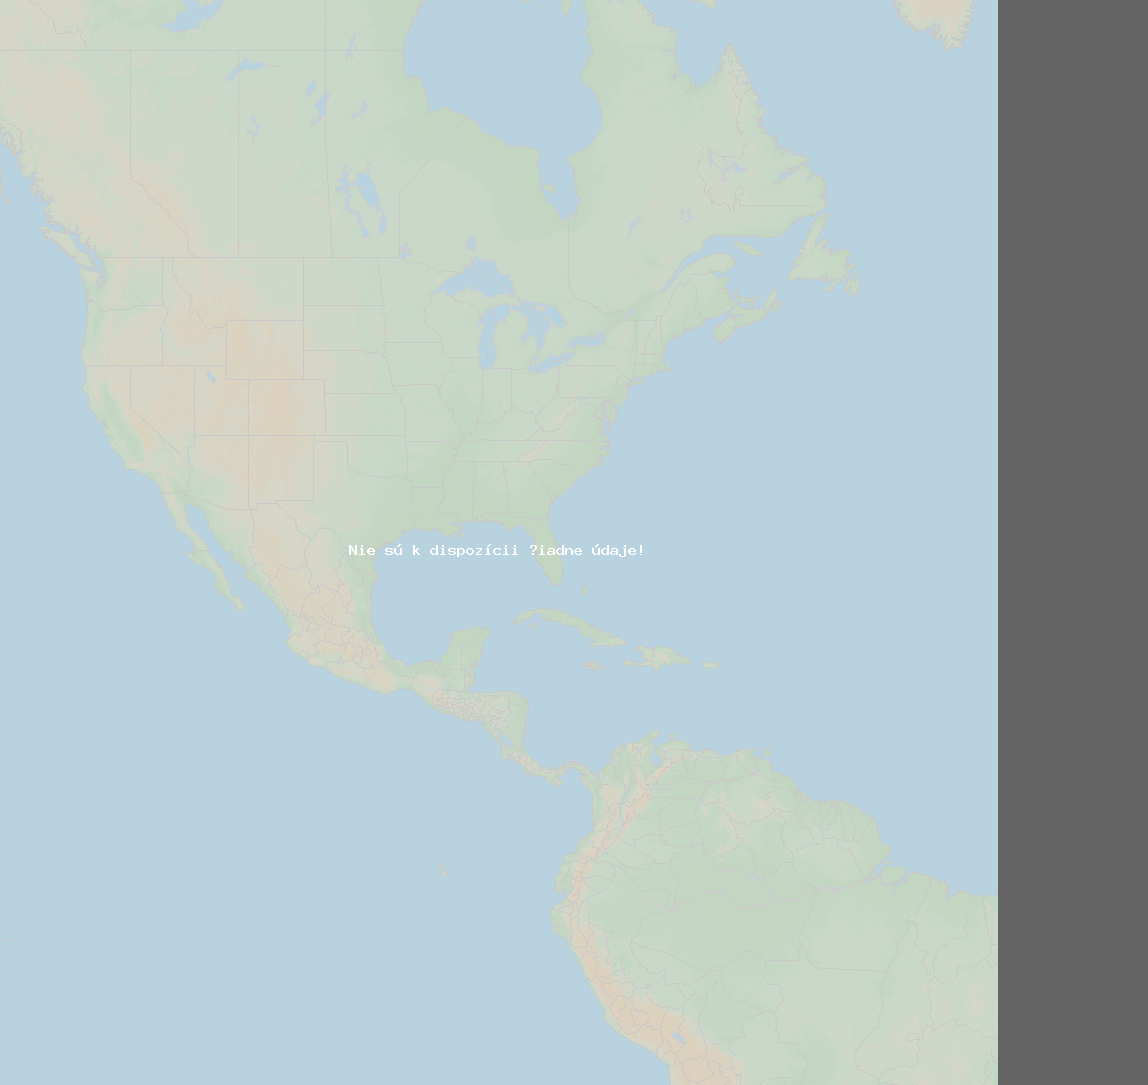 Pomer bleskov (Stanica Lawrence-Dade2) North America 2019 August